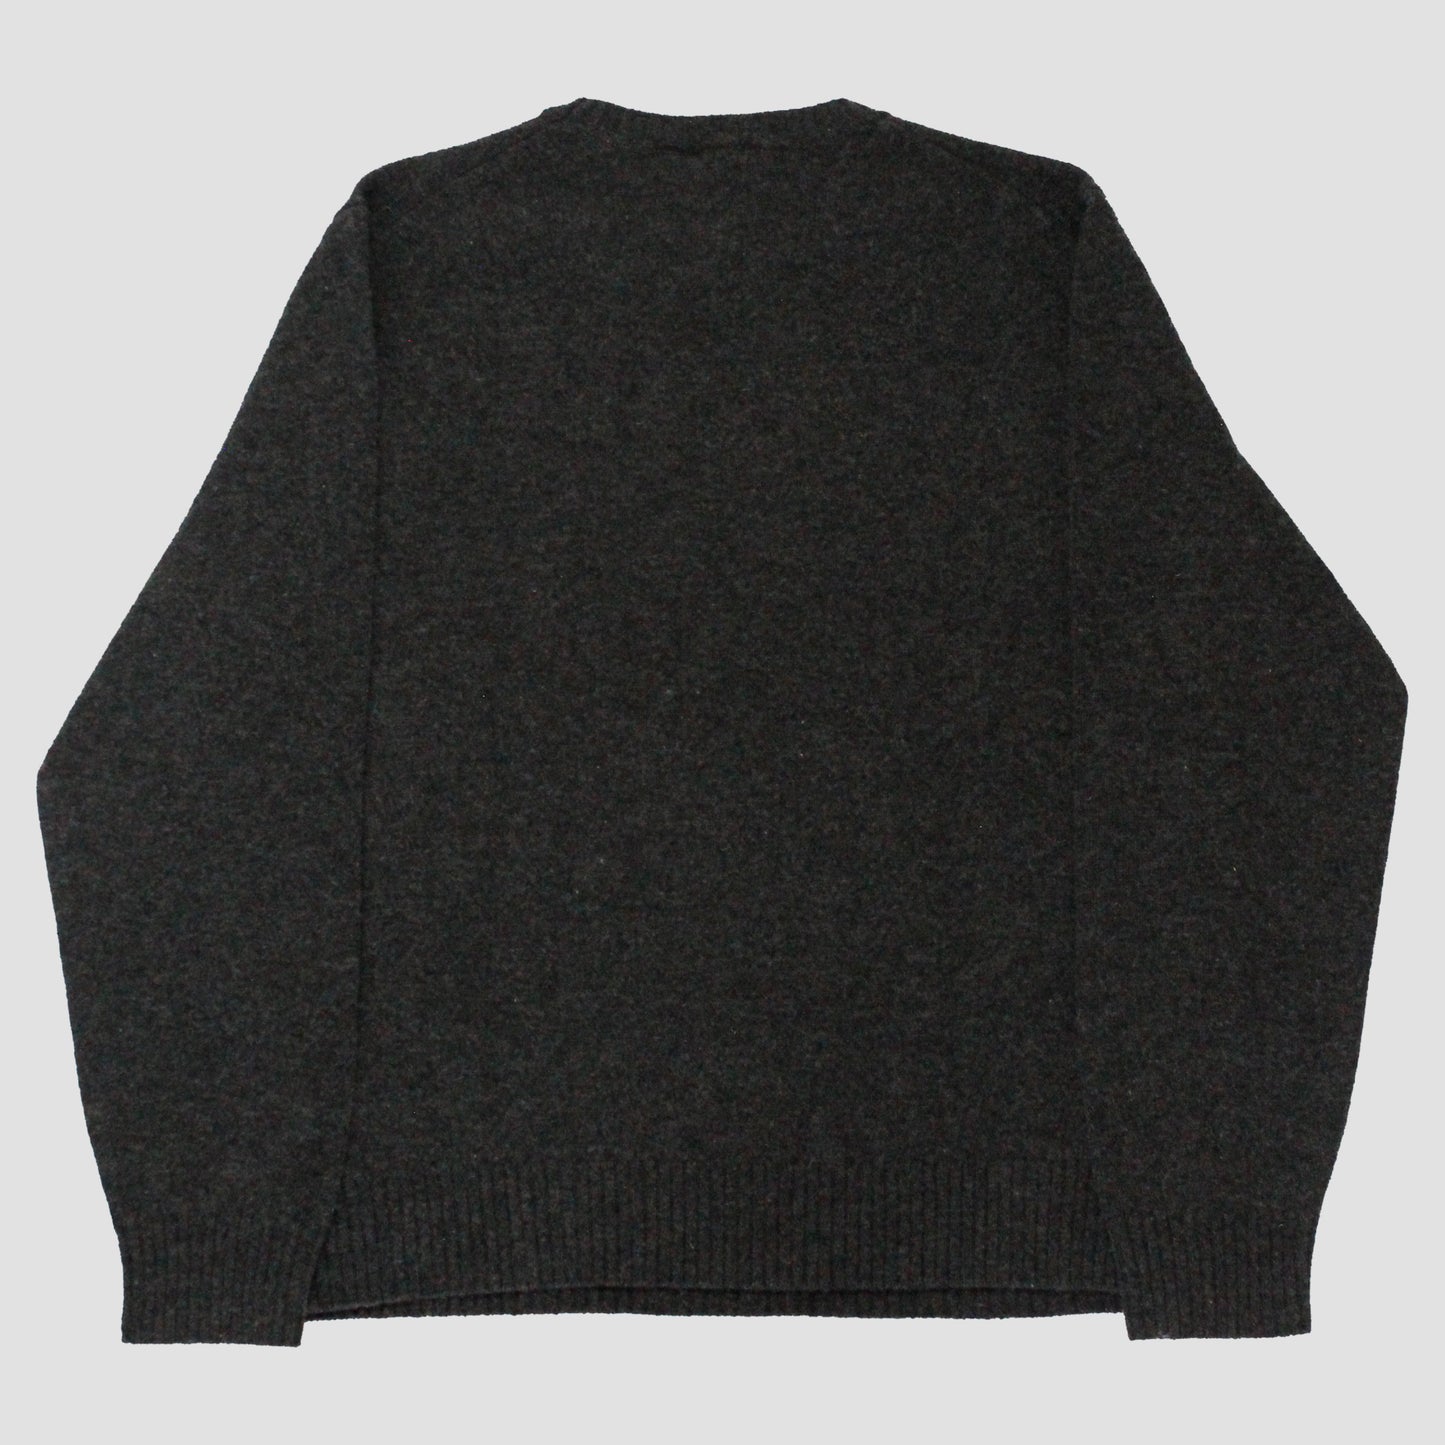 "666 BULLETS IN MY BRAIN" Pullover Wool Sweater (L)